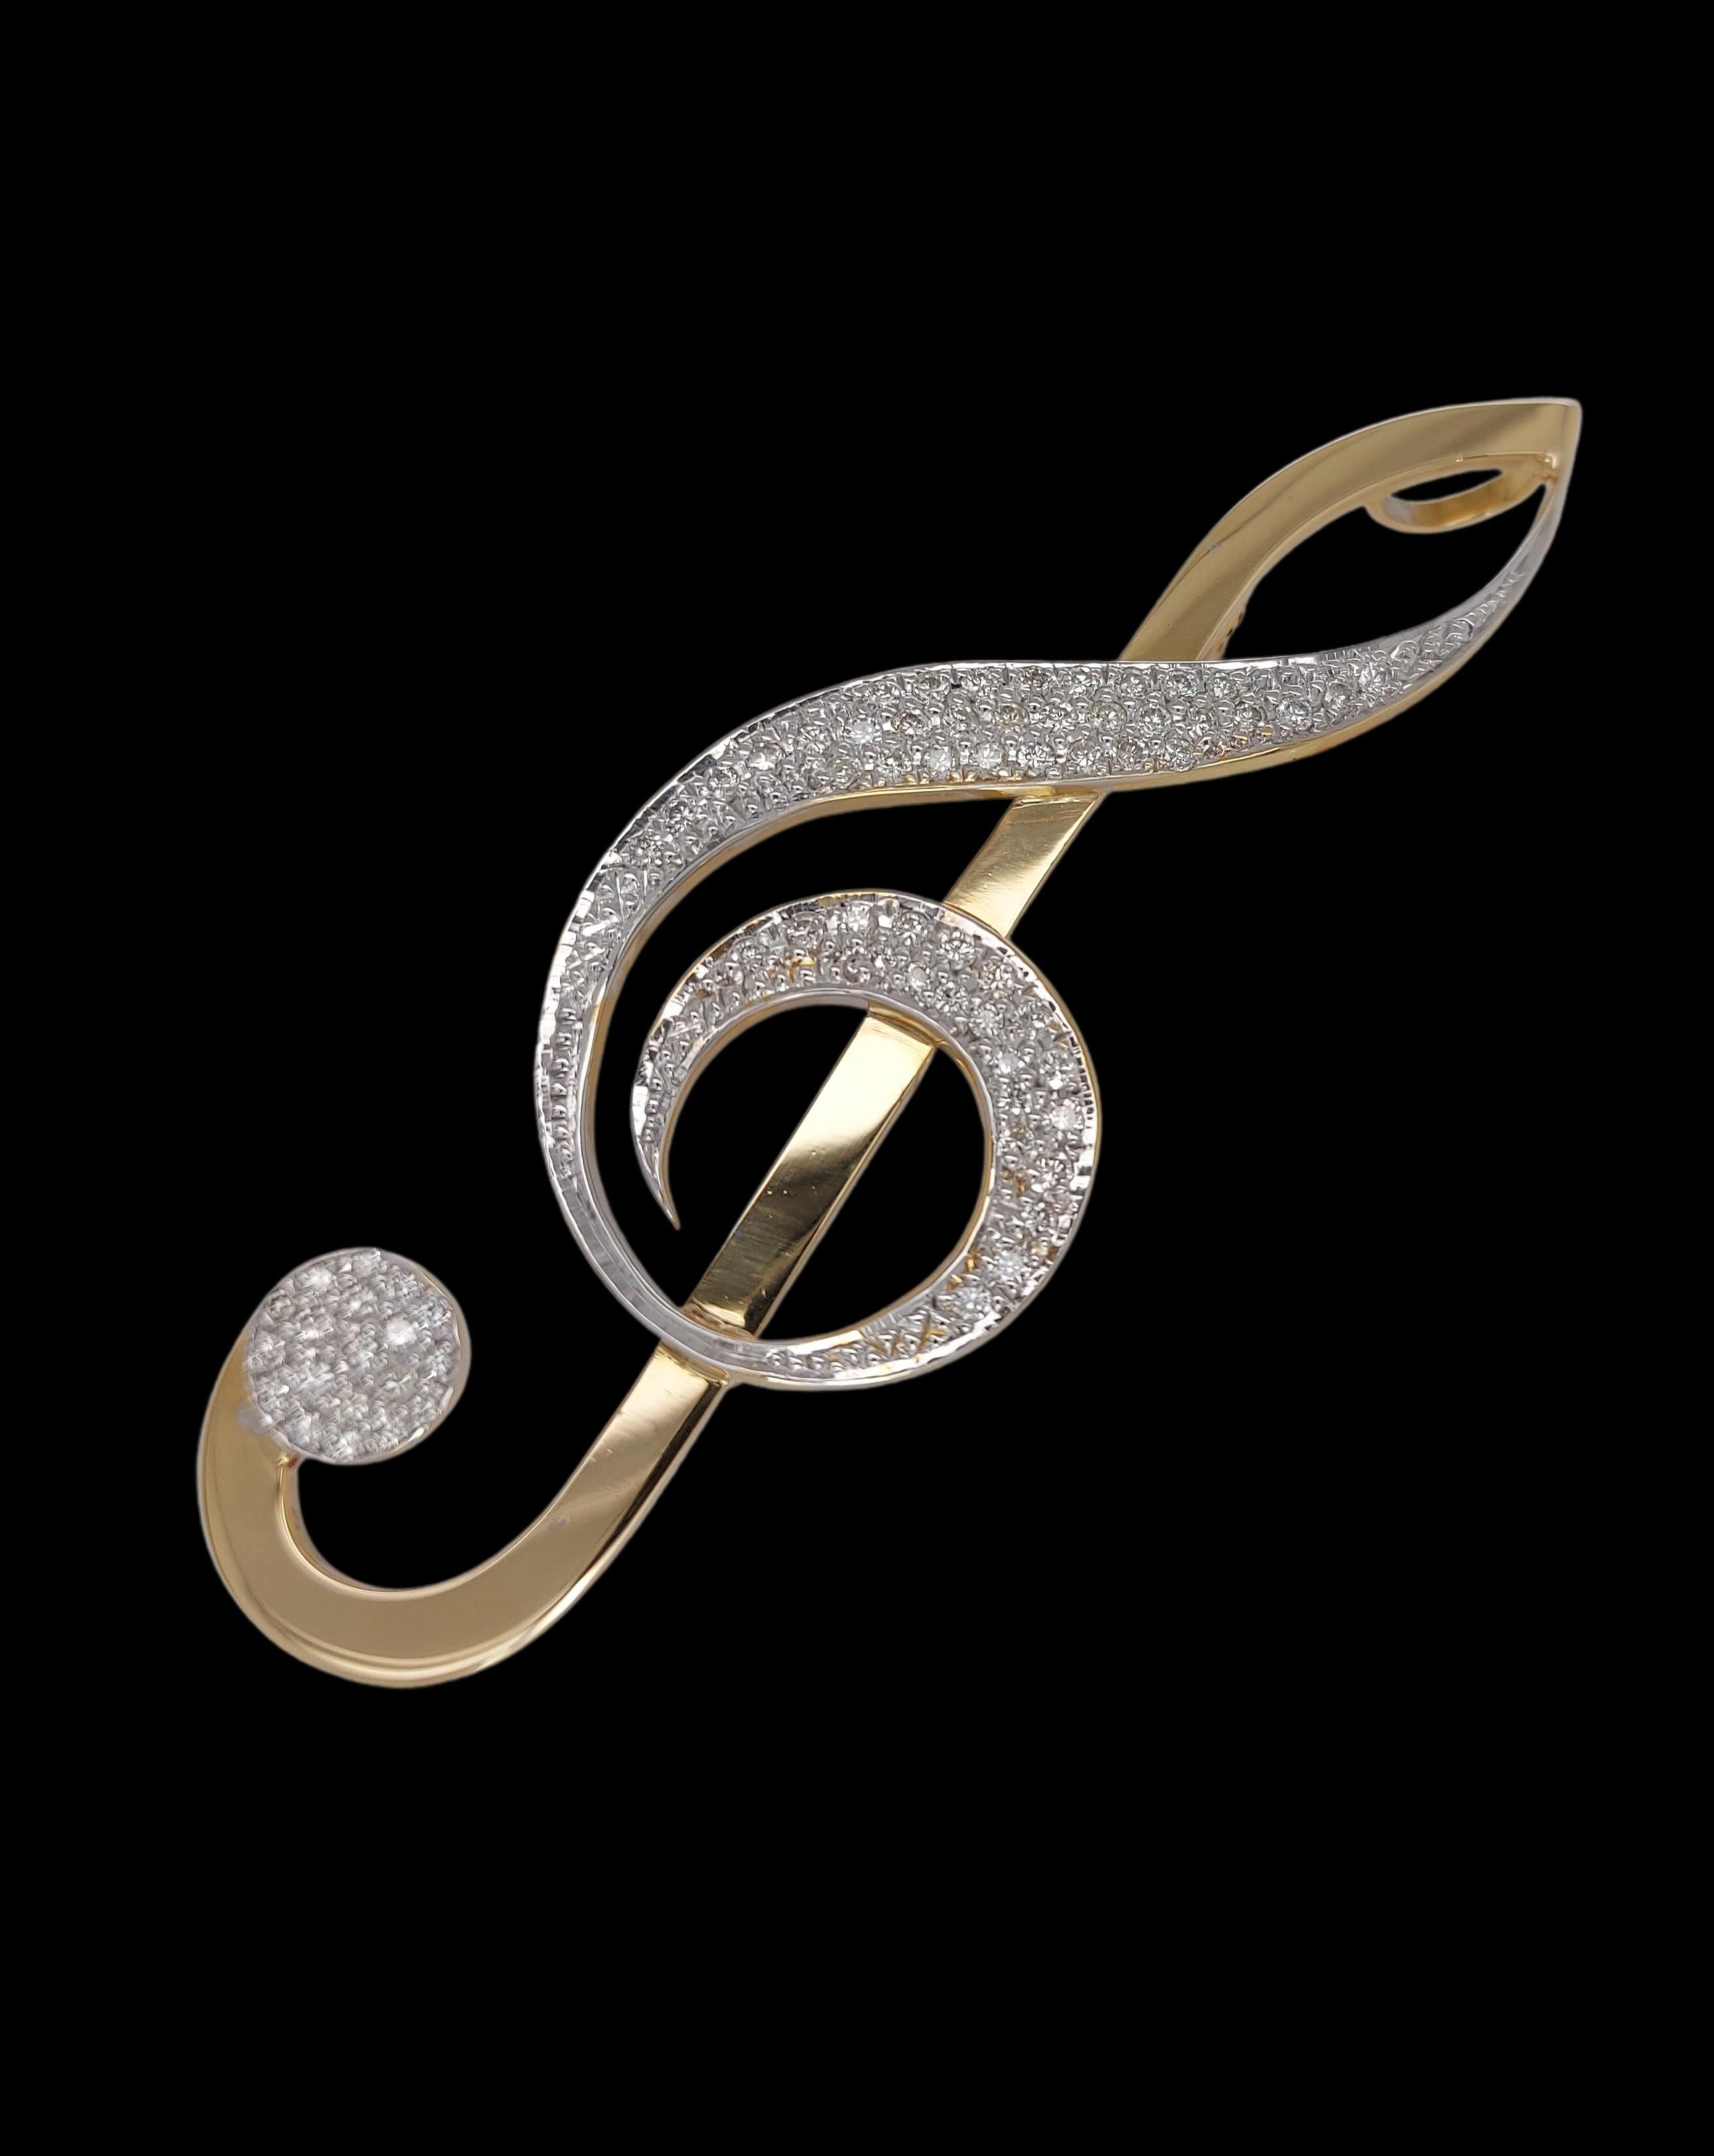 18kt Yellow Gold Music Note Necklace Hanger / Brooch  Diamonds set

Diamonds : 1.19 Ct. E/F  VVS/VS

Size : 25,8 mm wide , length 77,7 mm